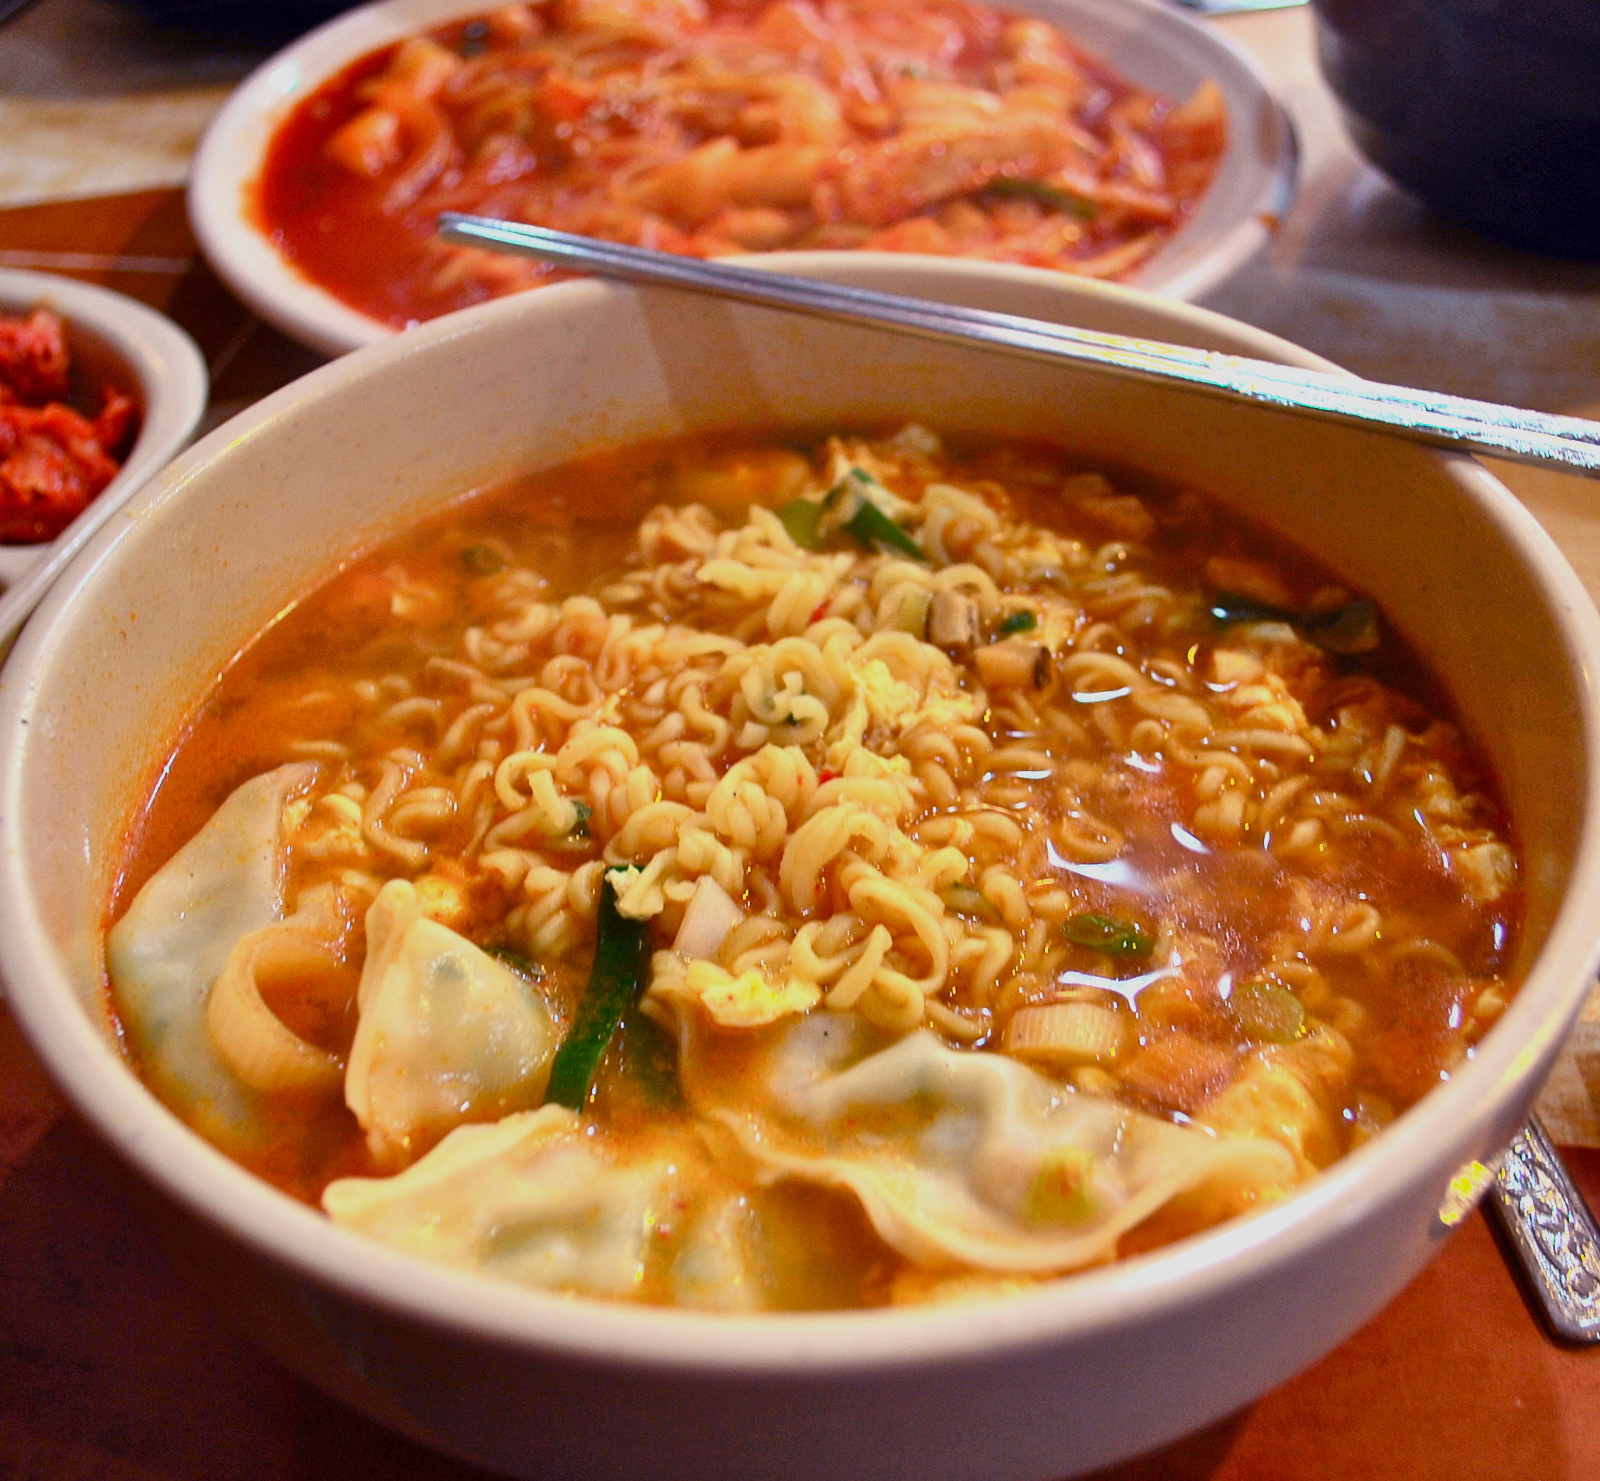 Korean ramen noodles with dumplings